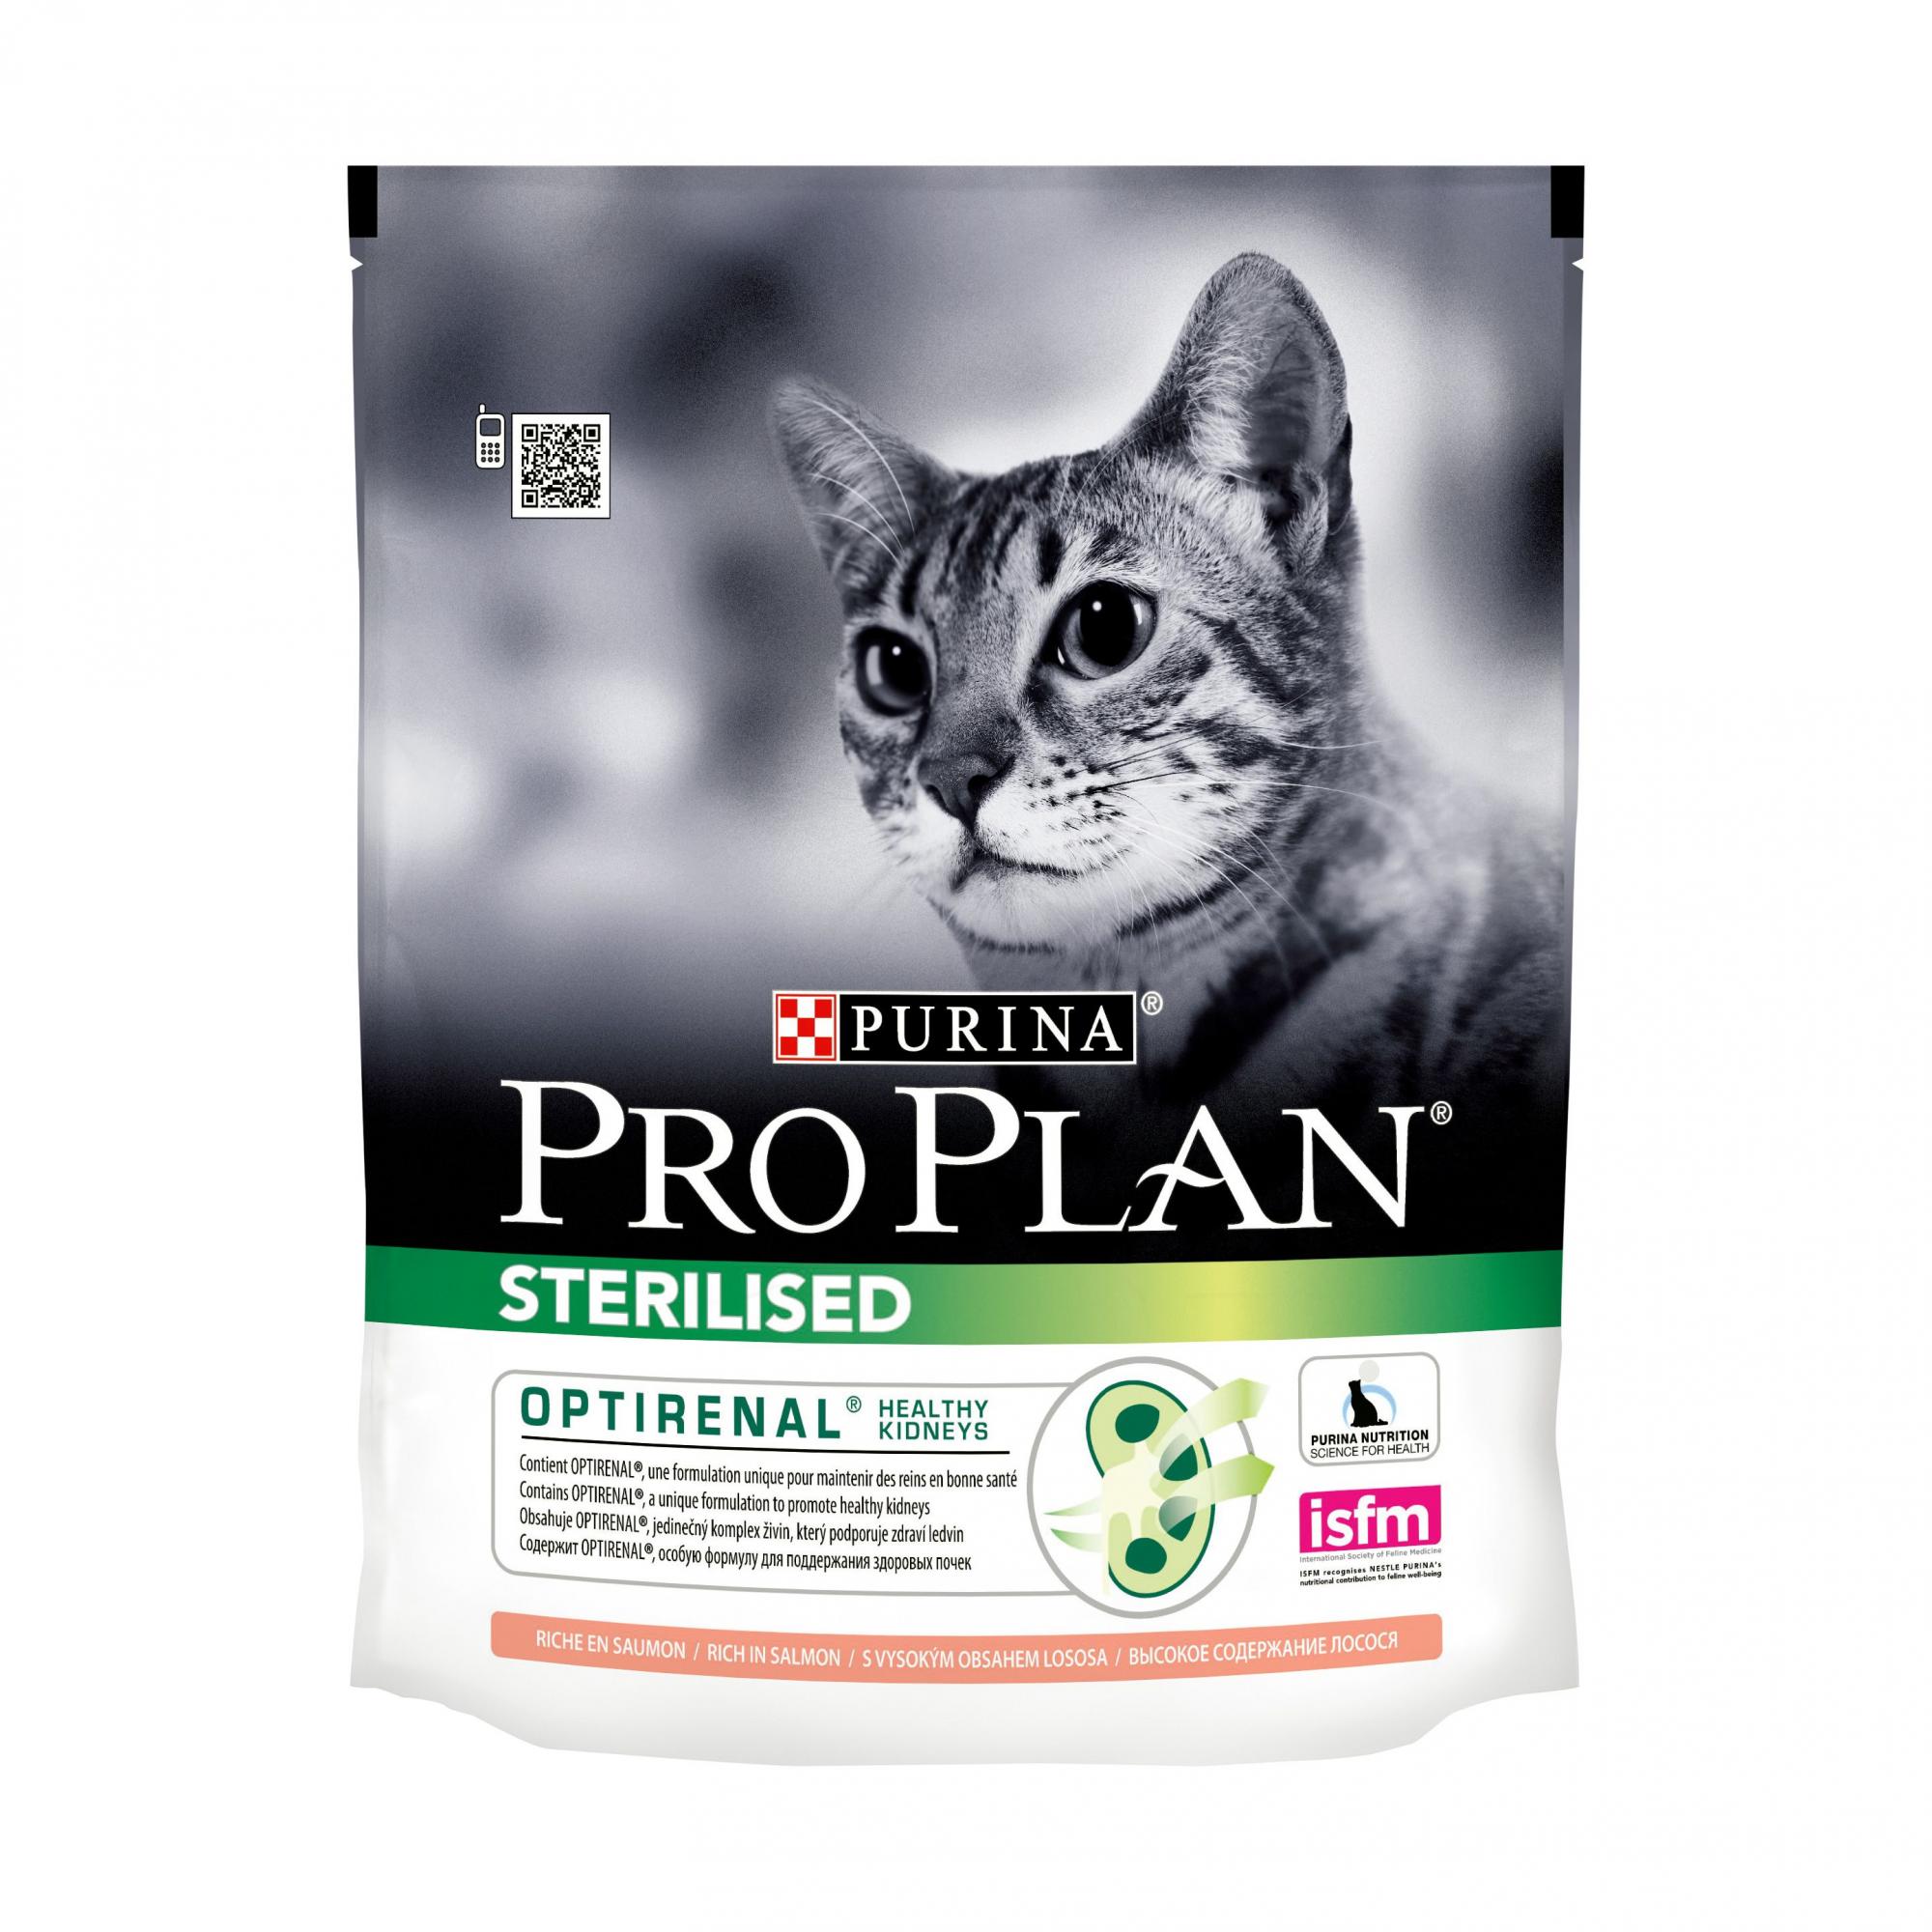 Pro Plan Sterilised сухой. Корм для кошек Проплан Деликат. Корм Purina Pro Plan для стерилизованных кошек. Корм Purina Pro Plan 400 г. Pro plan для стерилизованных котов